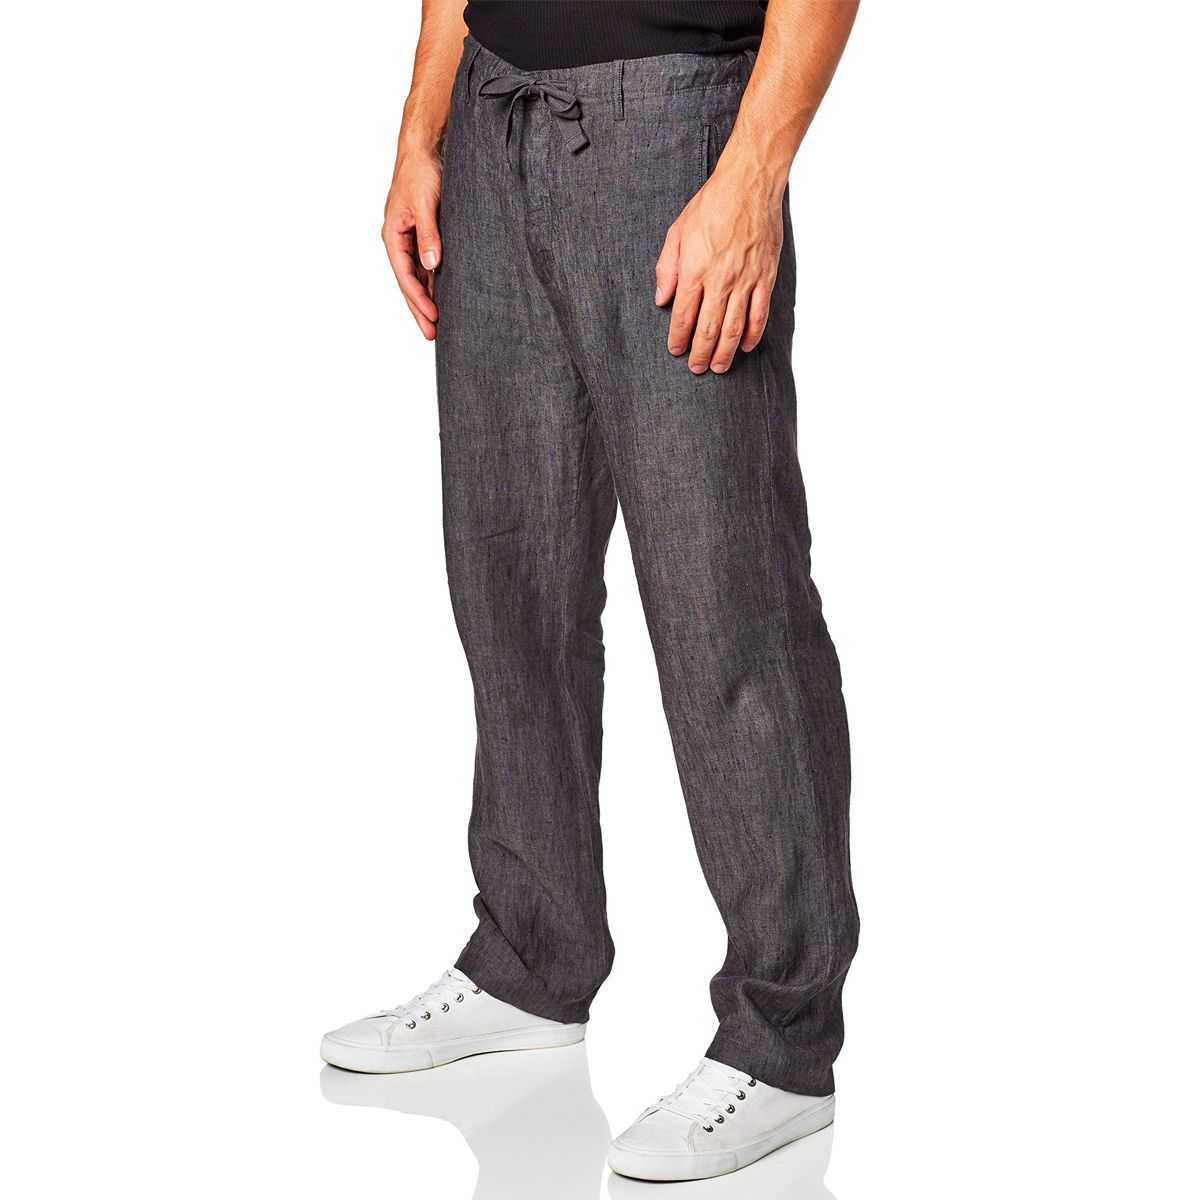 Best Linen Pants For Men  Most Comfortable Lightweight Linen Pants  Rank   Style